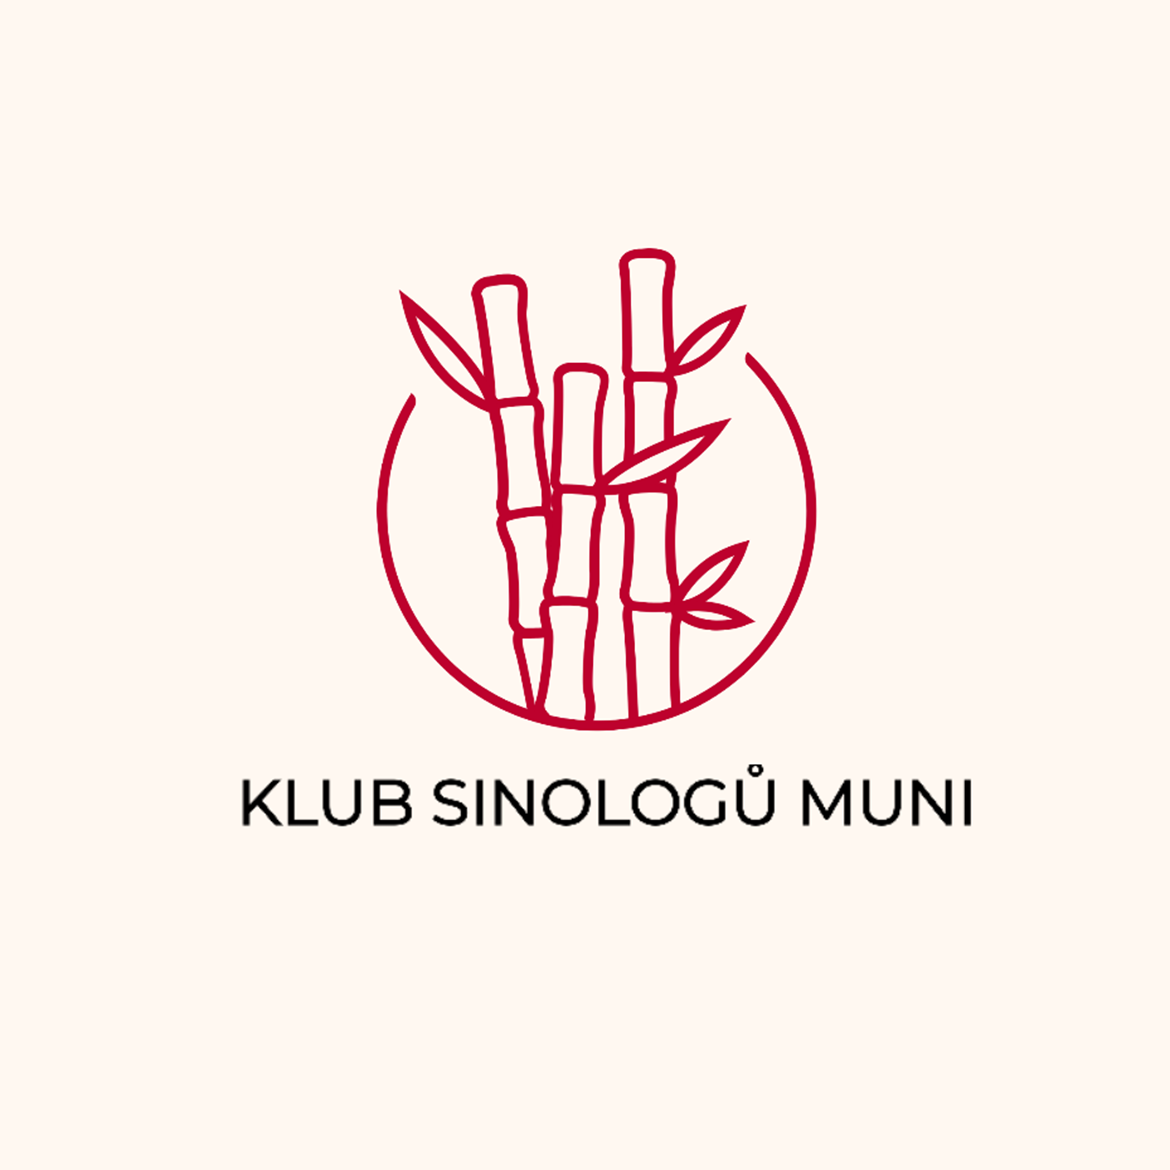 Klub sinologů MUNI